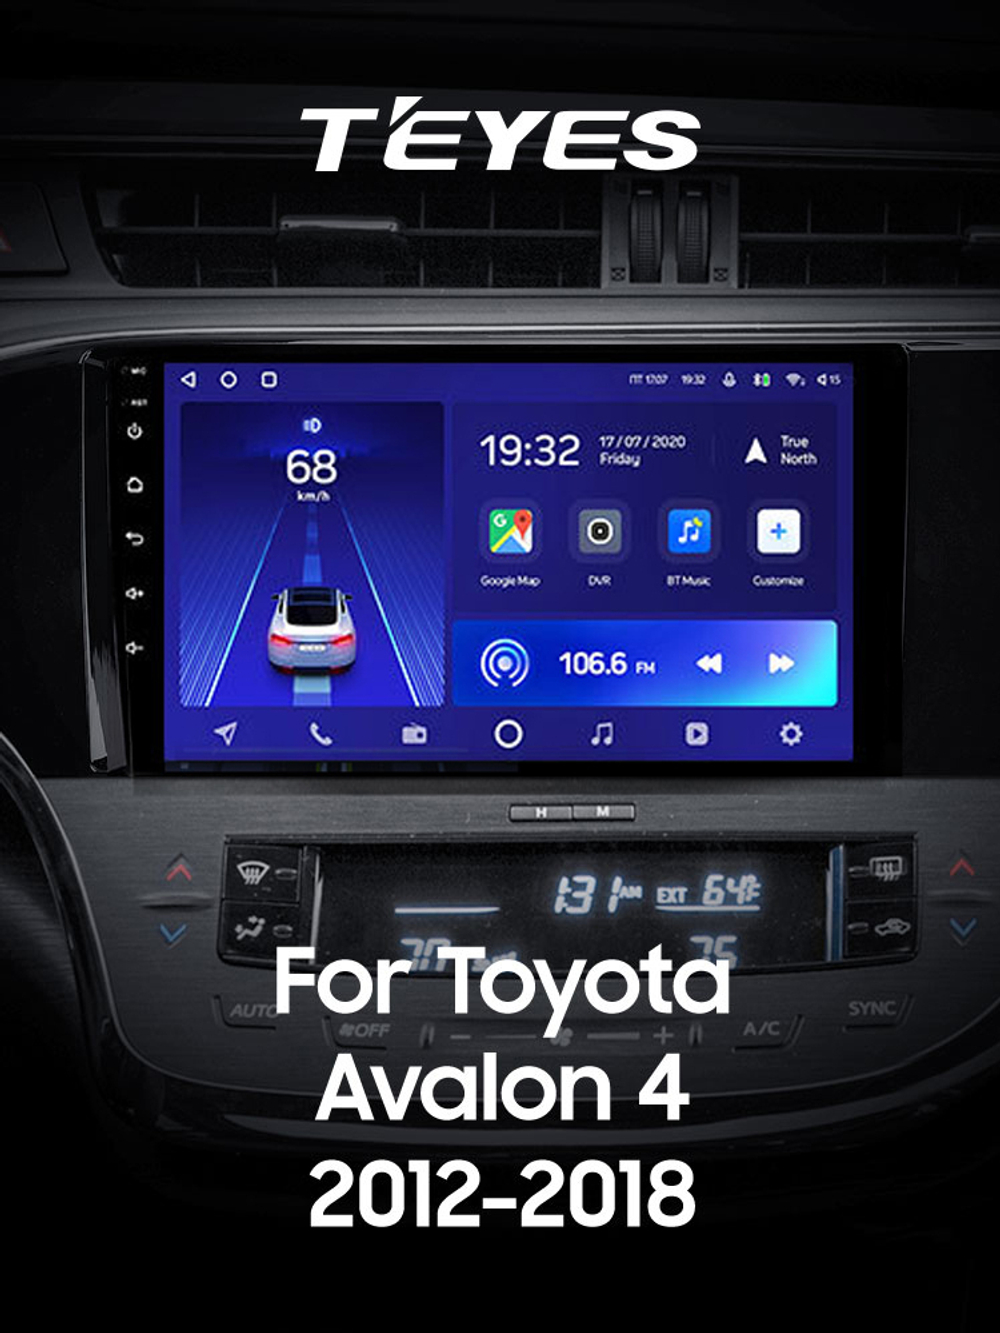 Teyes CC2L Plus 9" для Toyota Avalon 4 IV XX40 2012-2018